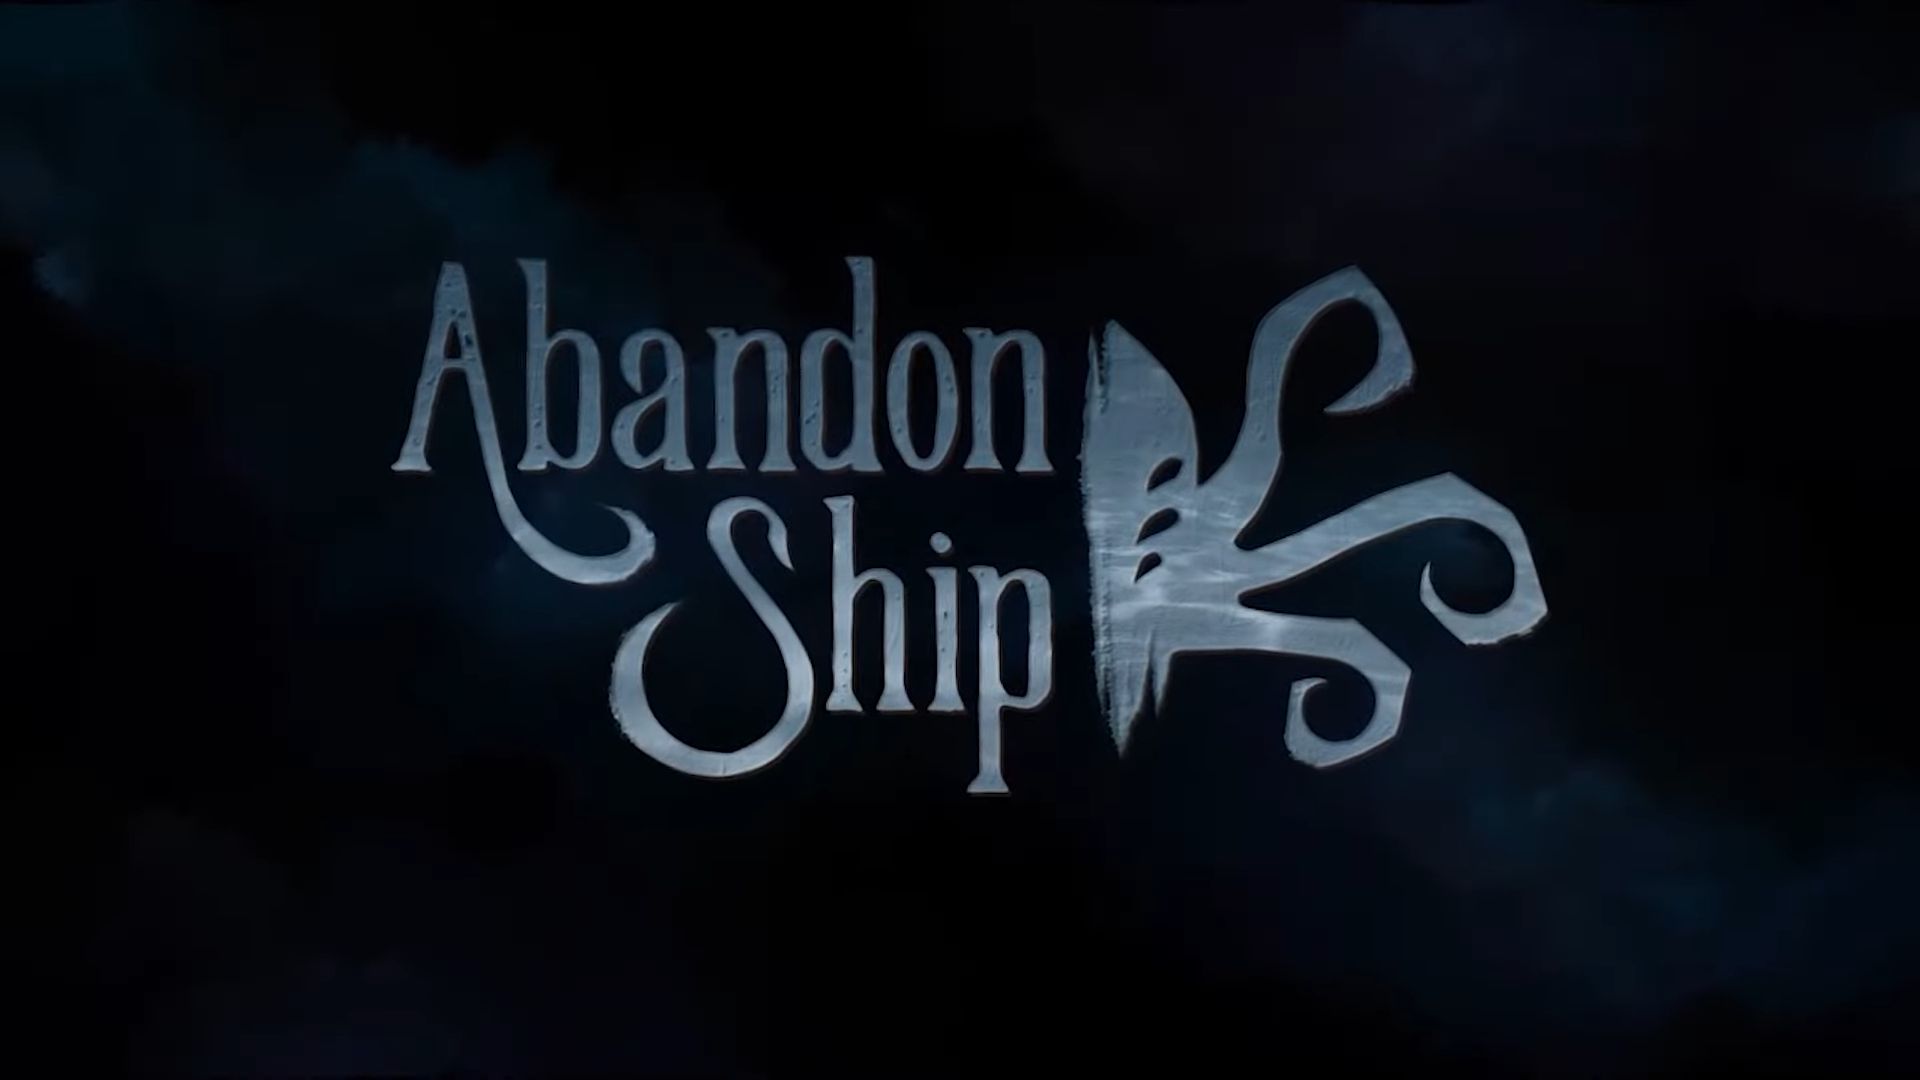 Scarica Abandon Ship gratis per Android A.n.d.r.o.i.d. .5...0. .a.n.d. .m.o.r.e.